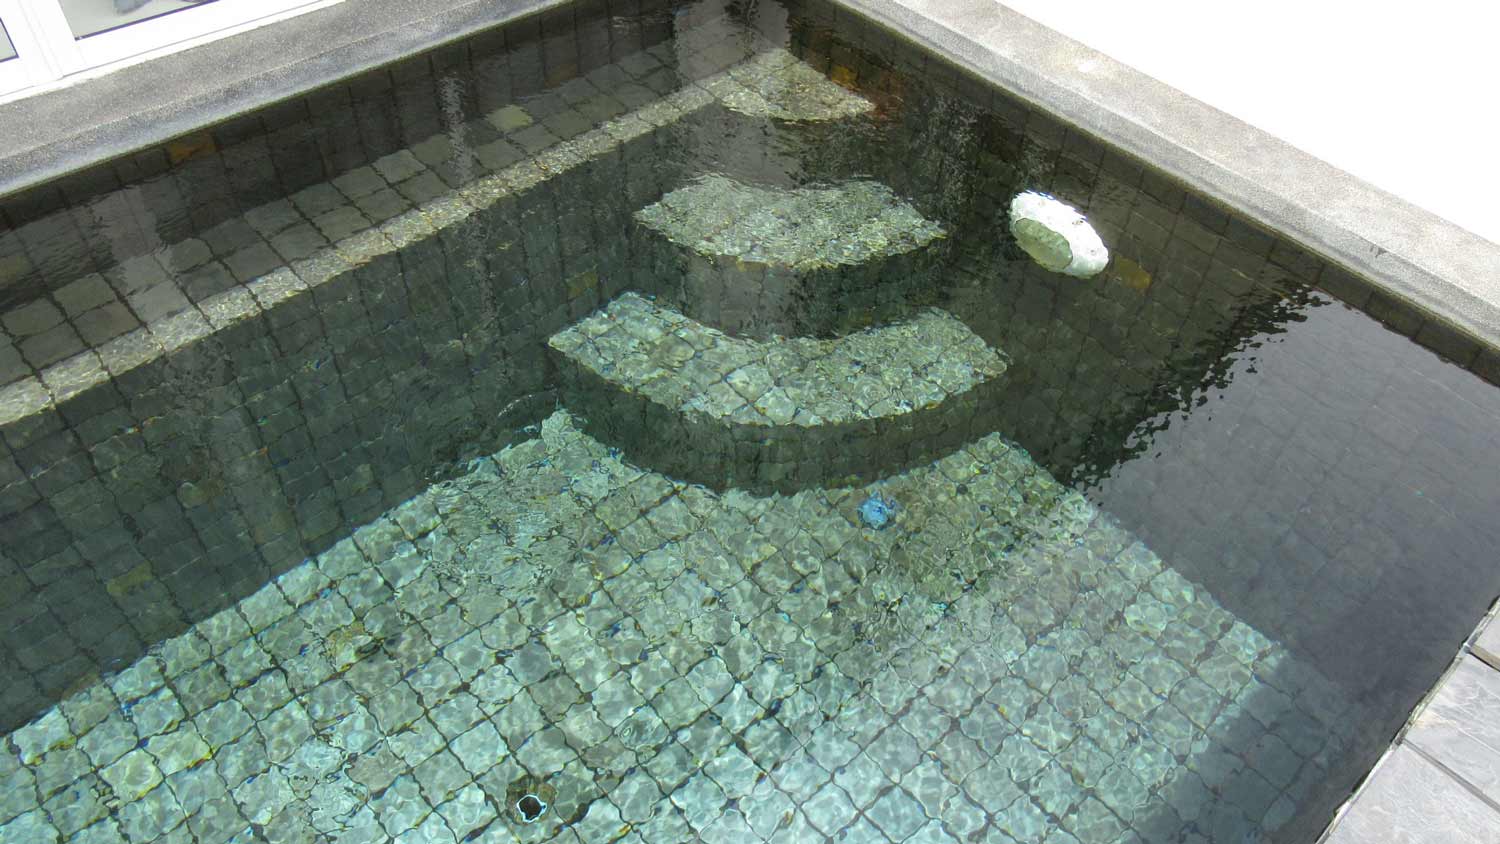 location villa vacances a koh samui en thailande photo 44 piscine en carreaux de pierre naturelle sur la terrasse de la villa